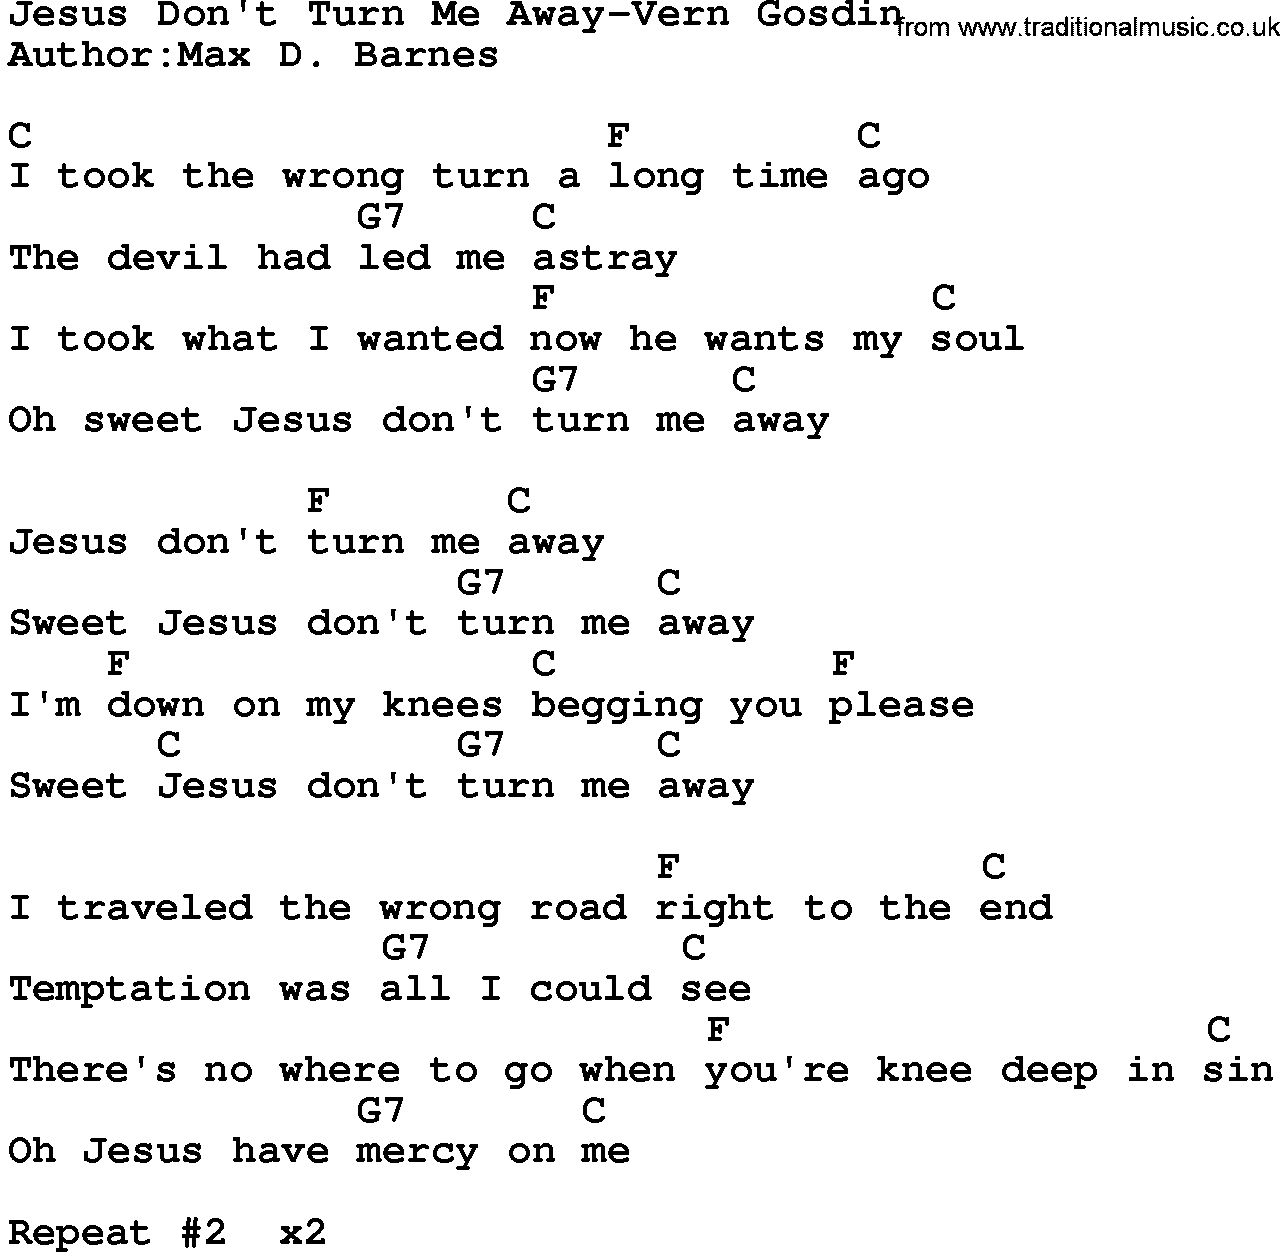 Country music song: Jesus Don't Turn Me Away-Vern Gosdin lyrics and chords